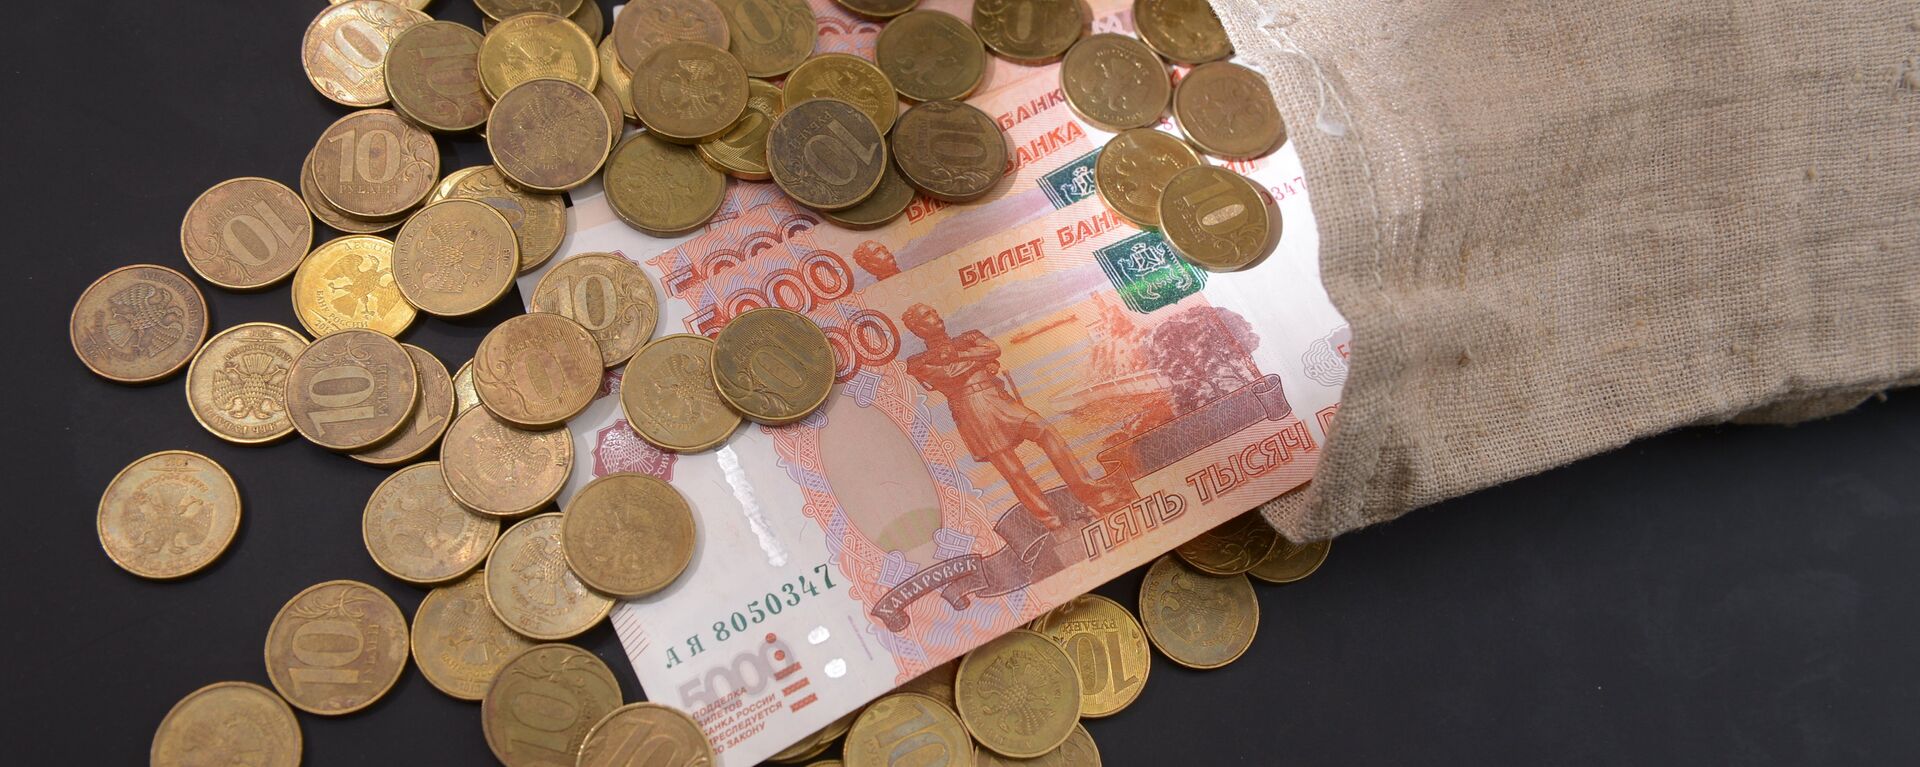 Monedas y billetes del rublo ruso - Sputnik Mundo, 1920, 23.05.2022